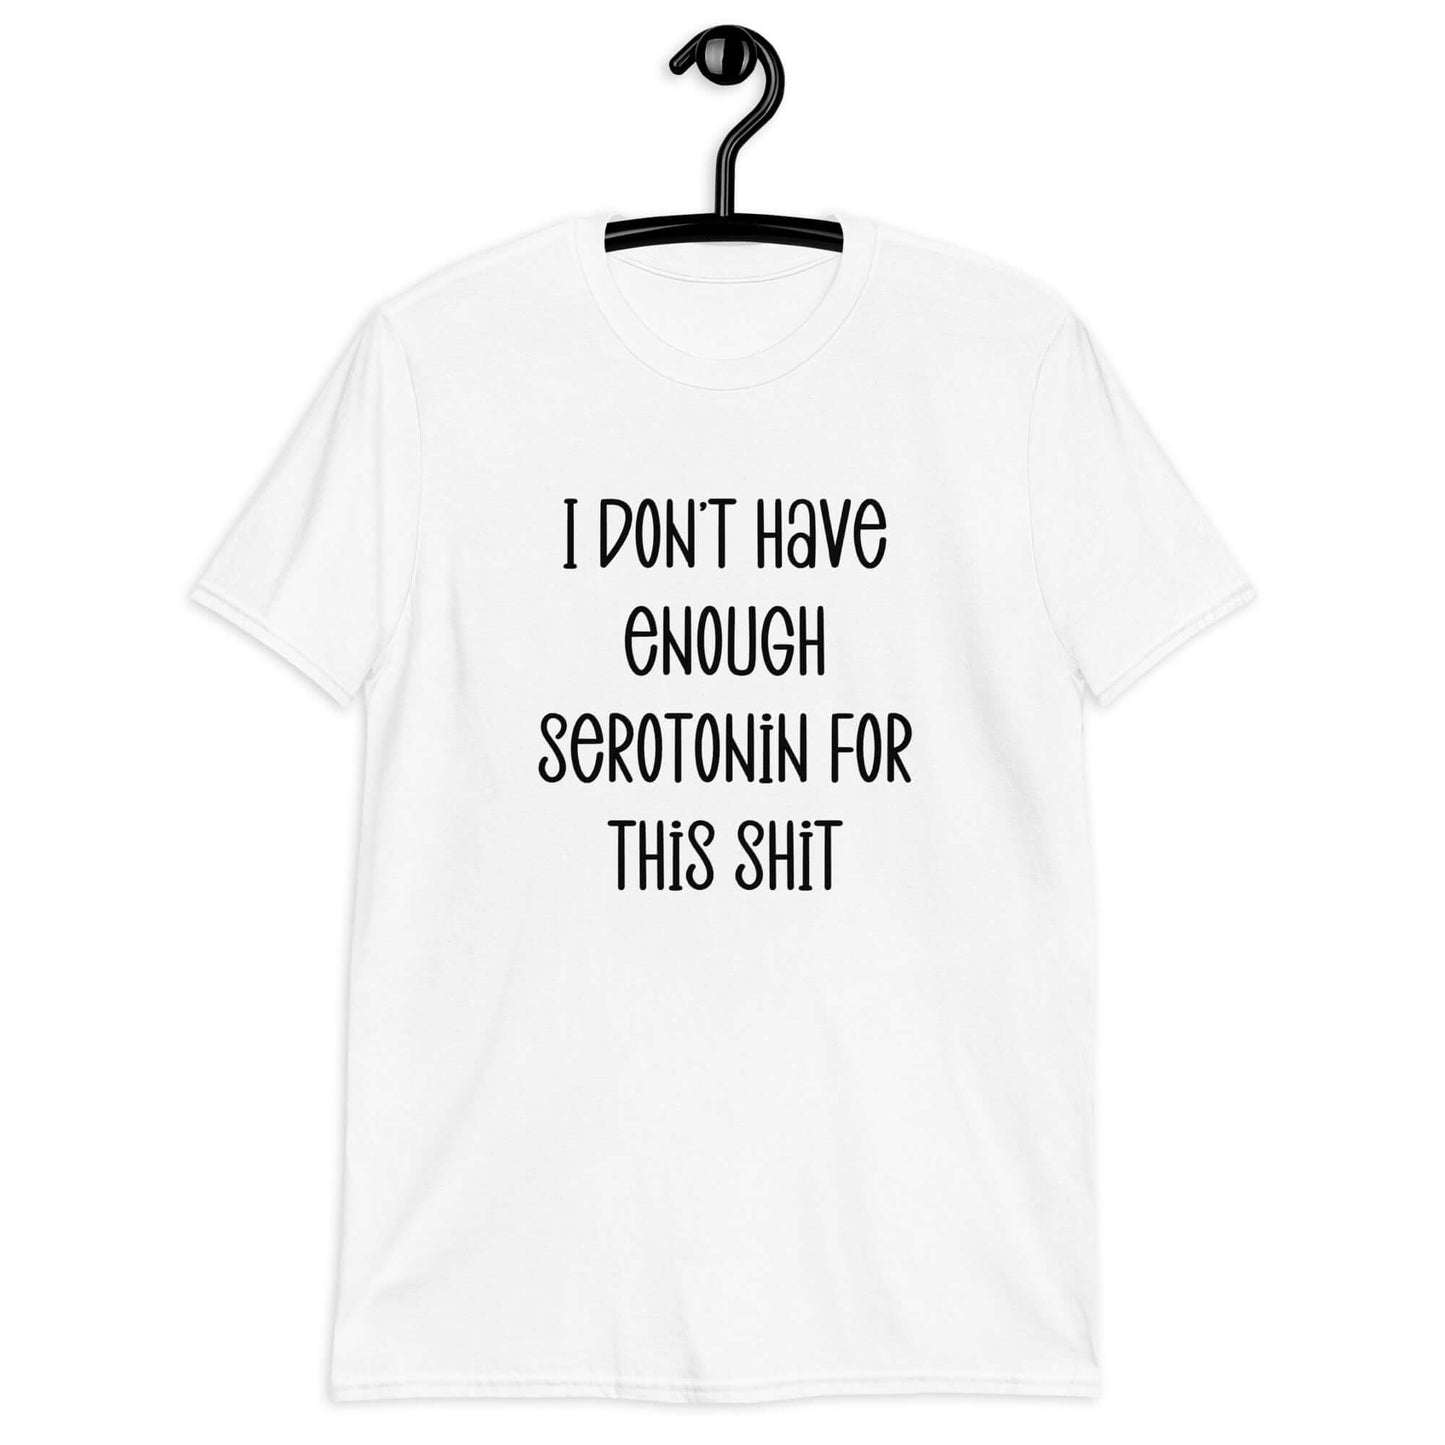 I don't have enough serotonin for this t-shirt